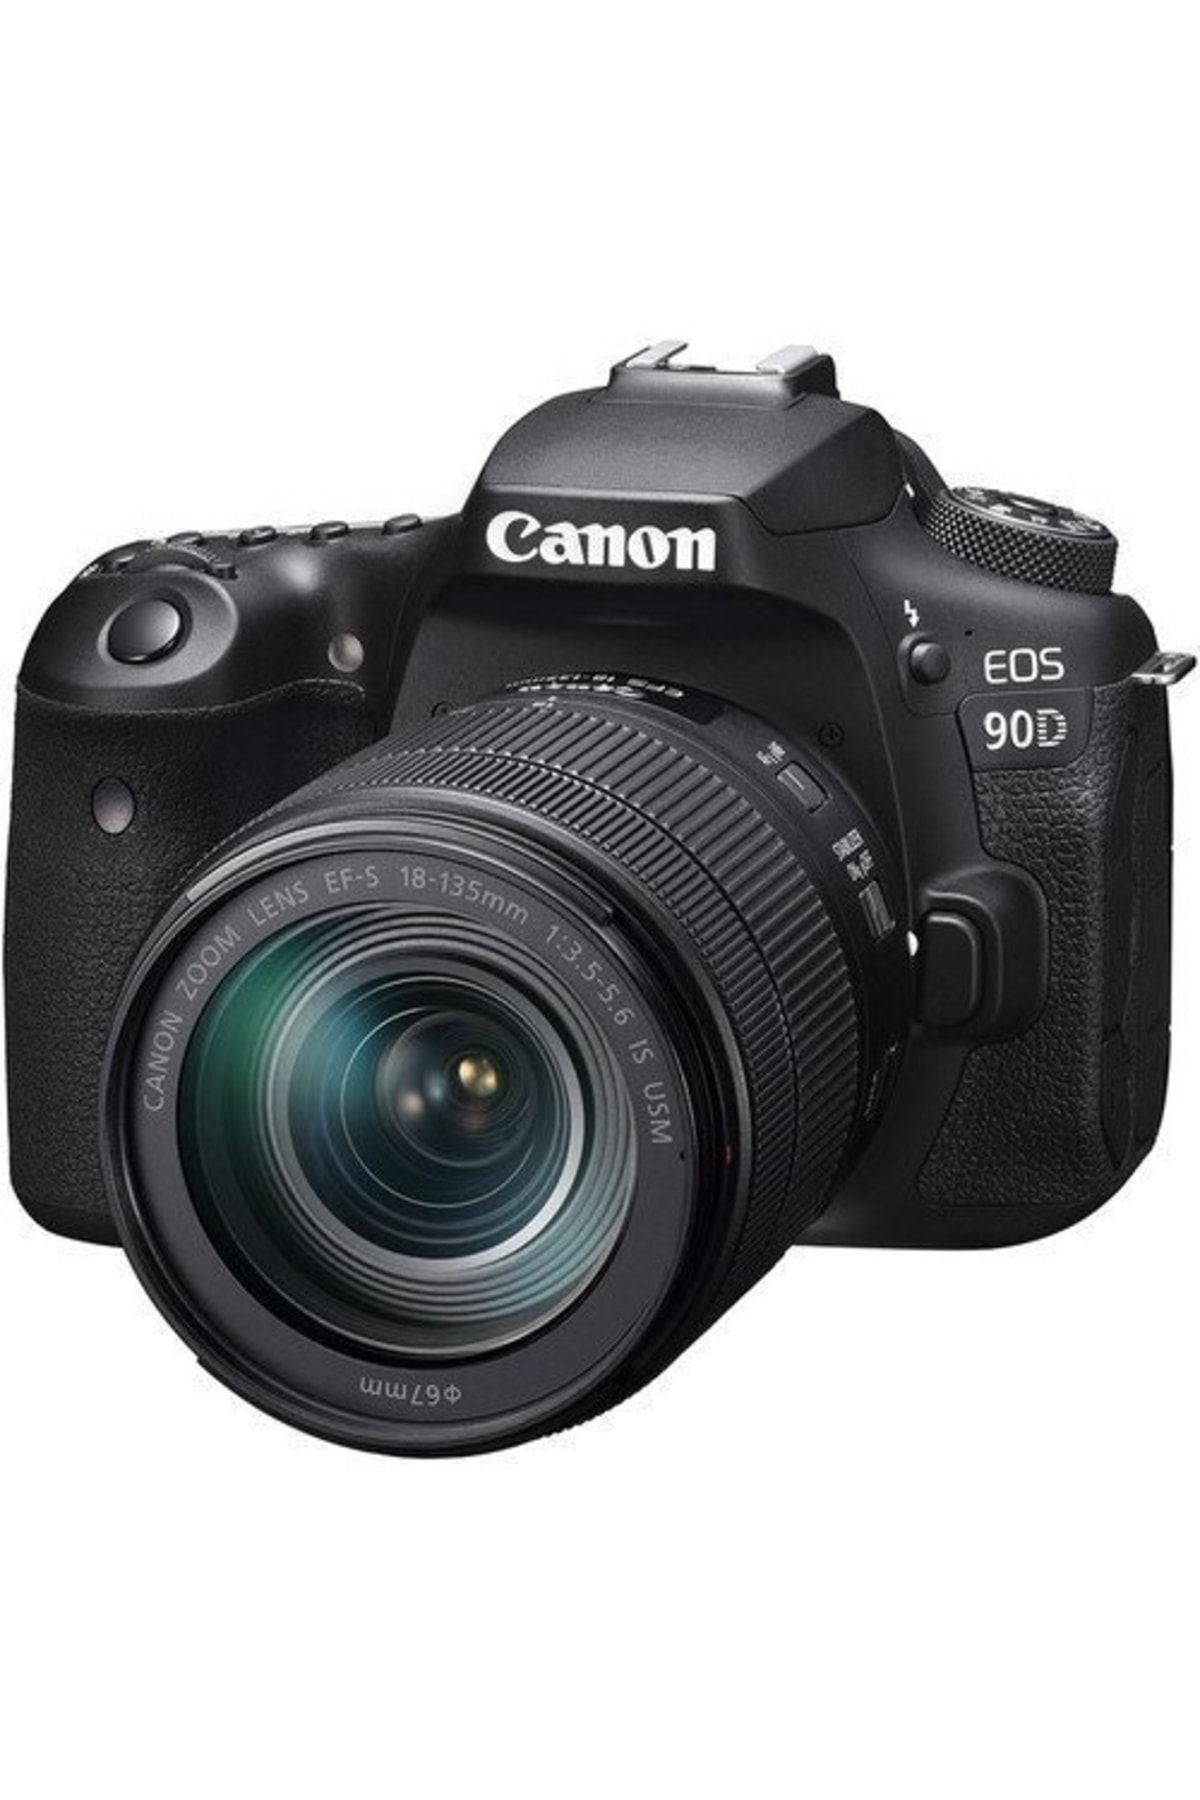 Canon Eos 90d 18-135mm Nano Lens Kit